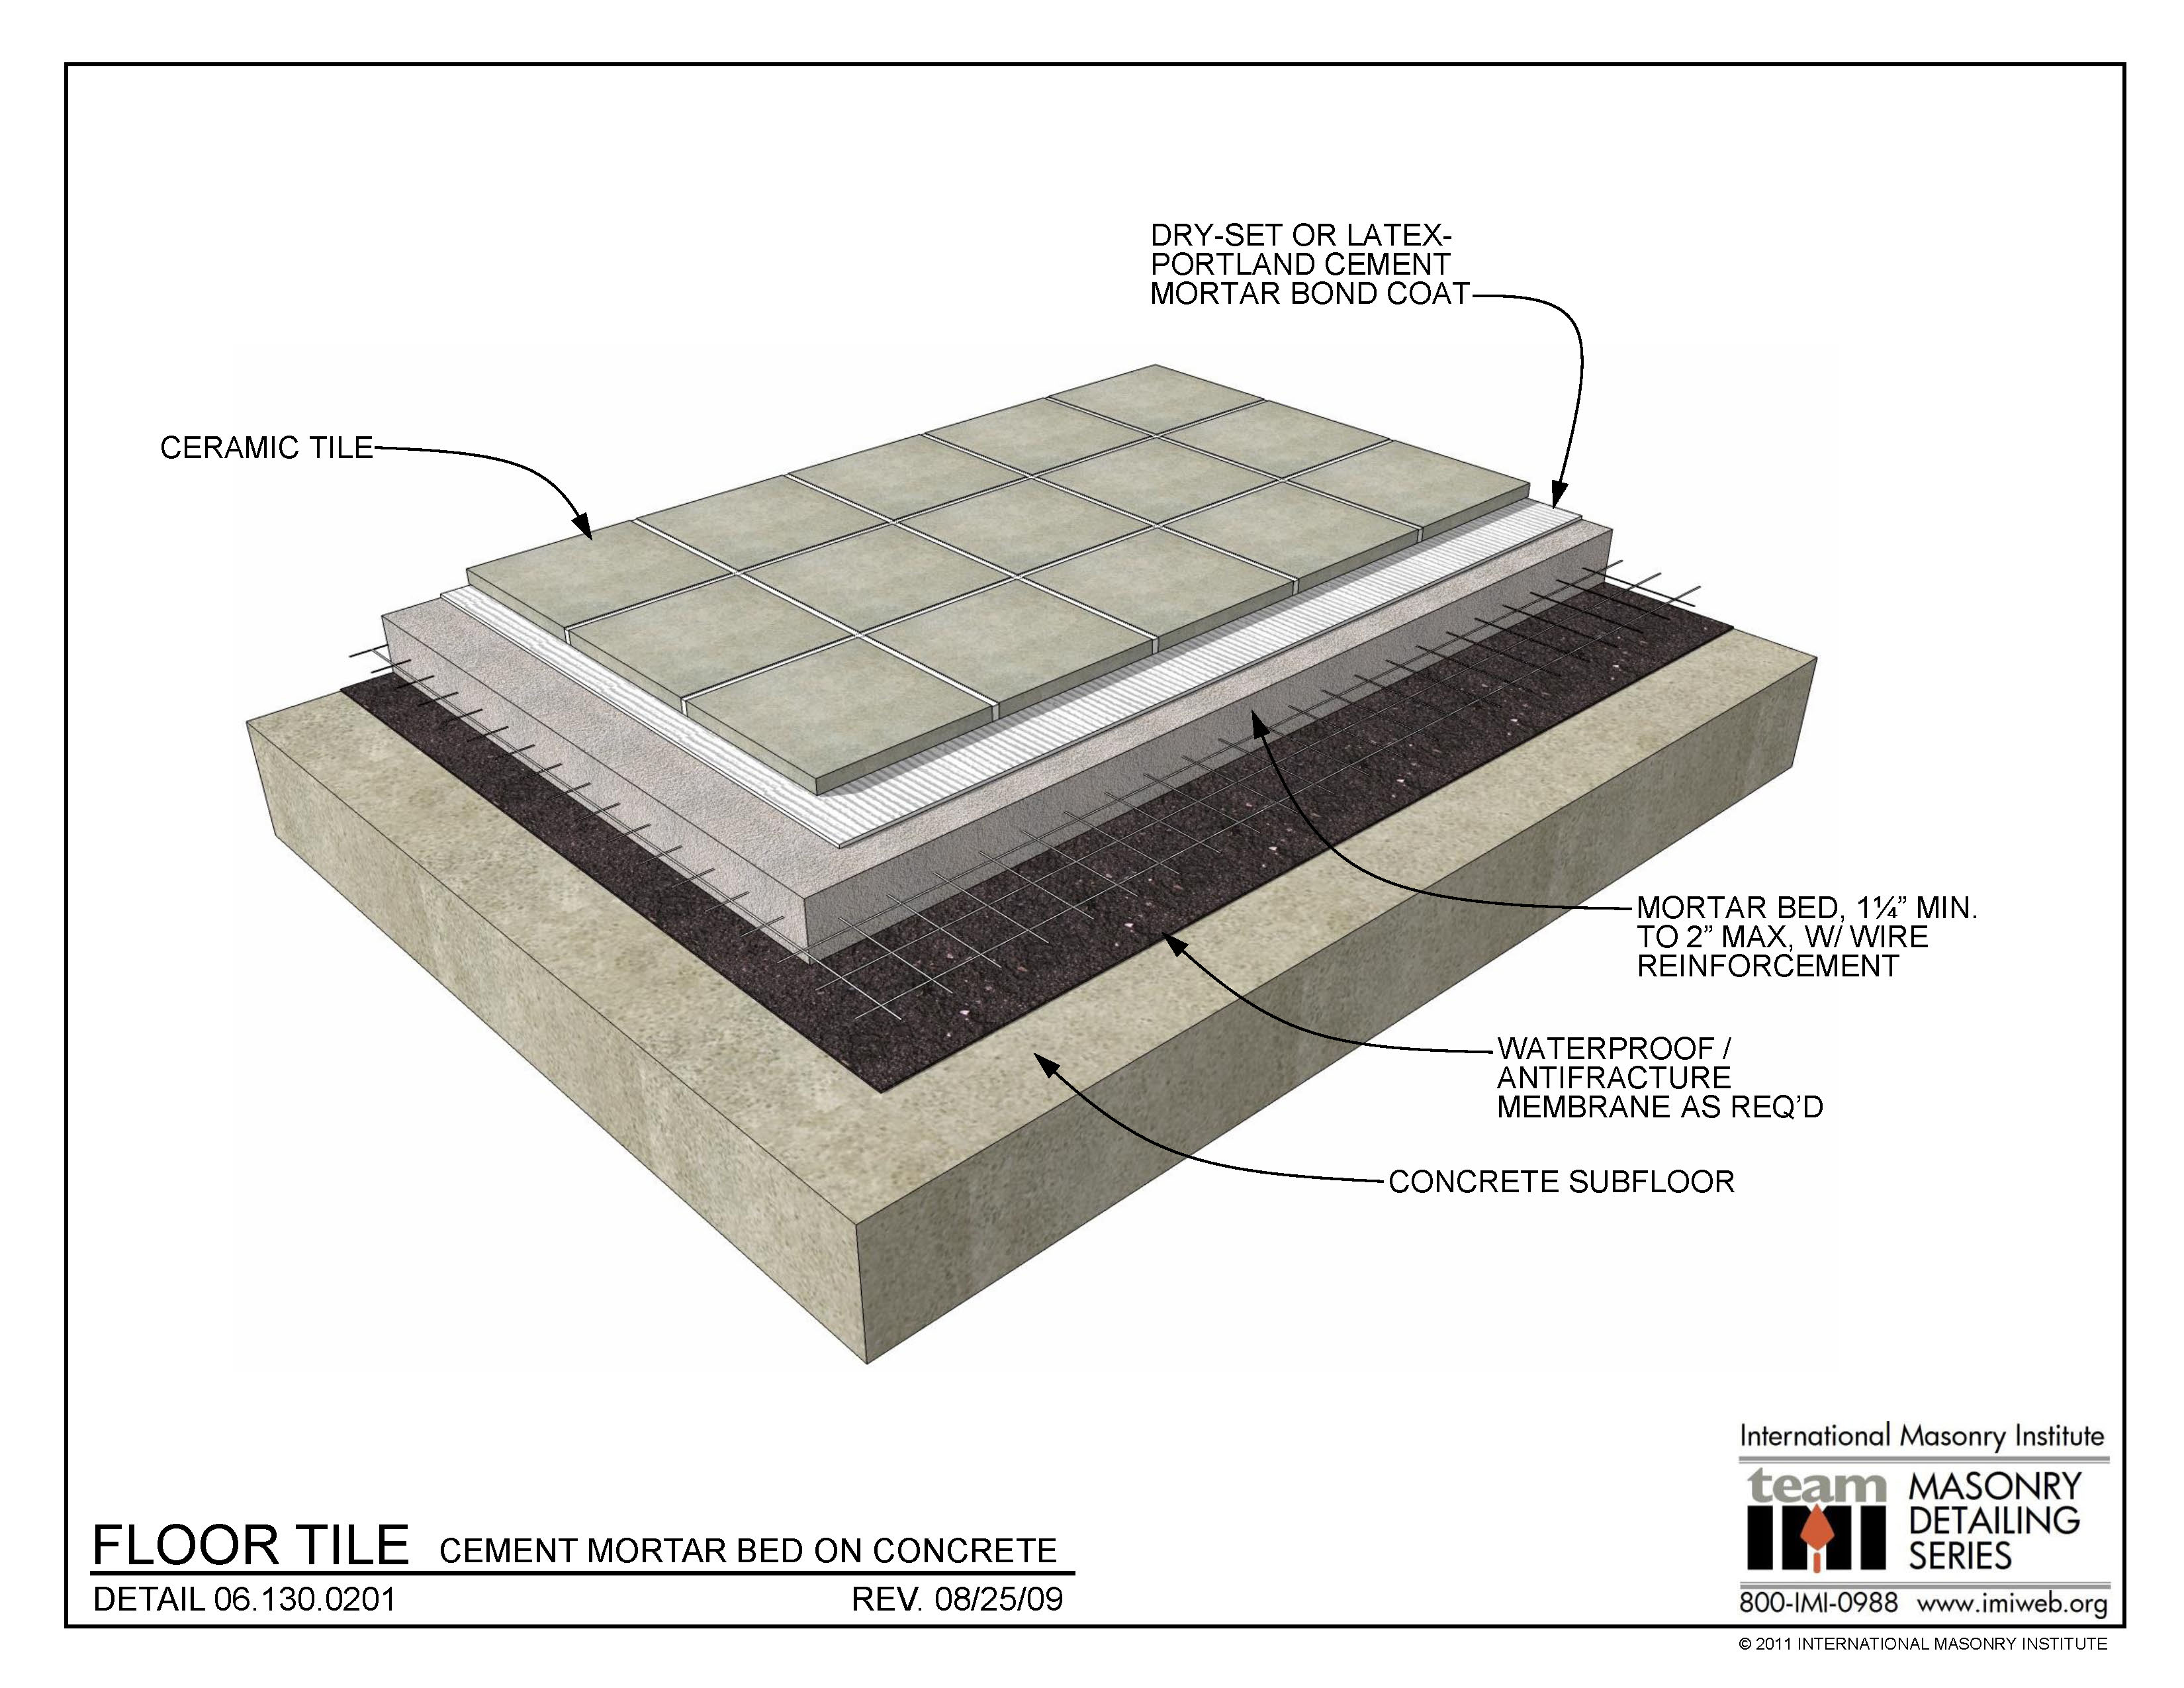 06.130.0201 Floor Tile Cement Mortar Bed on Concrete International Masonry Institute